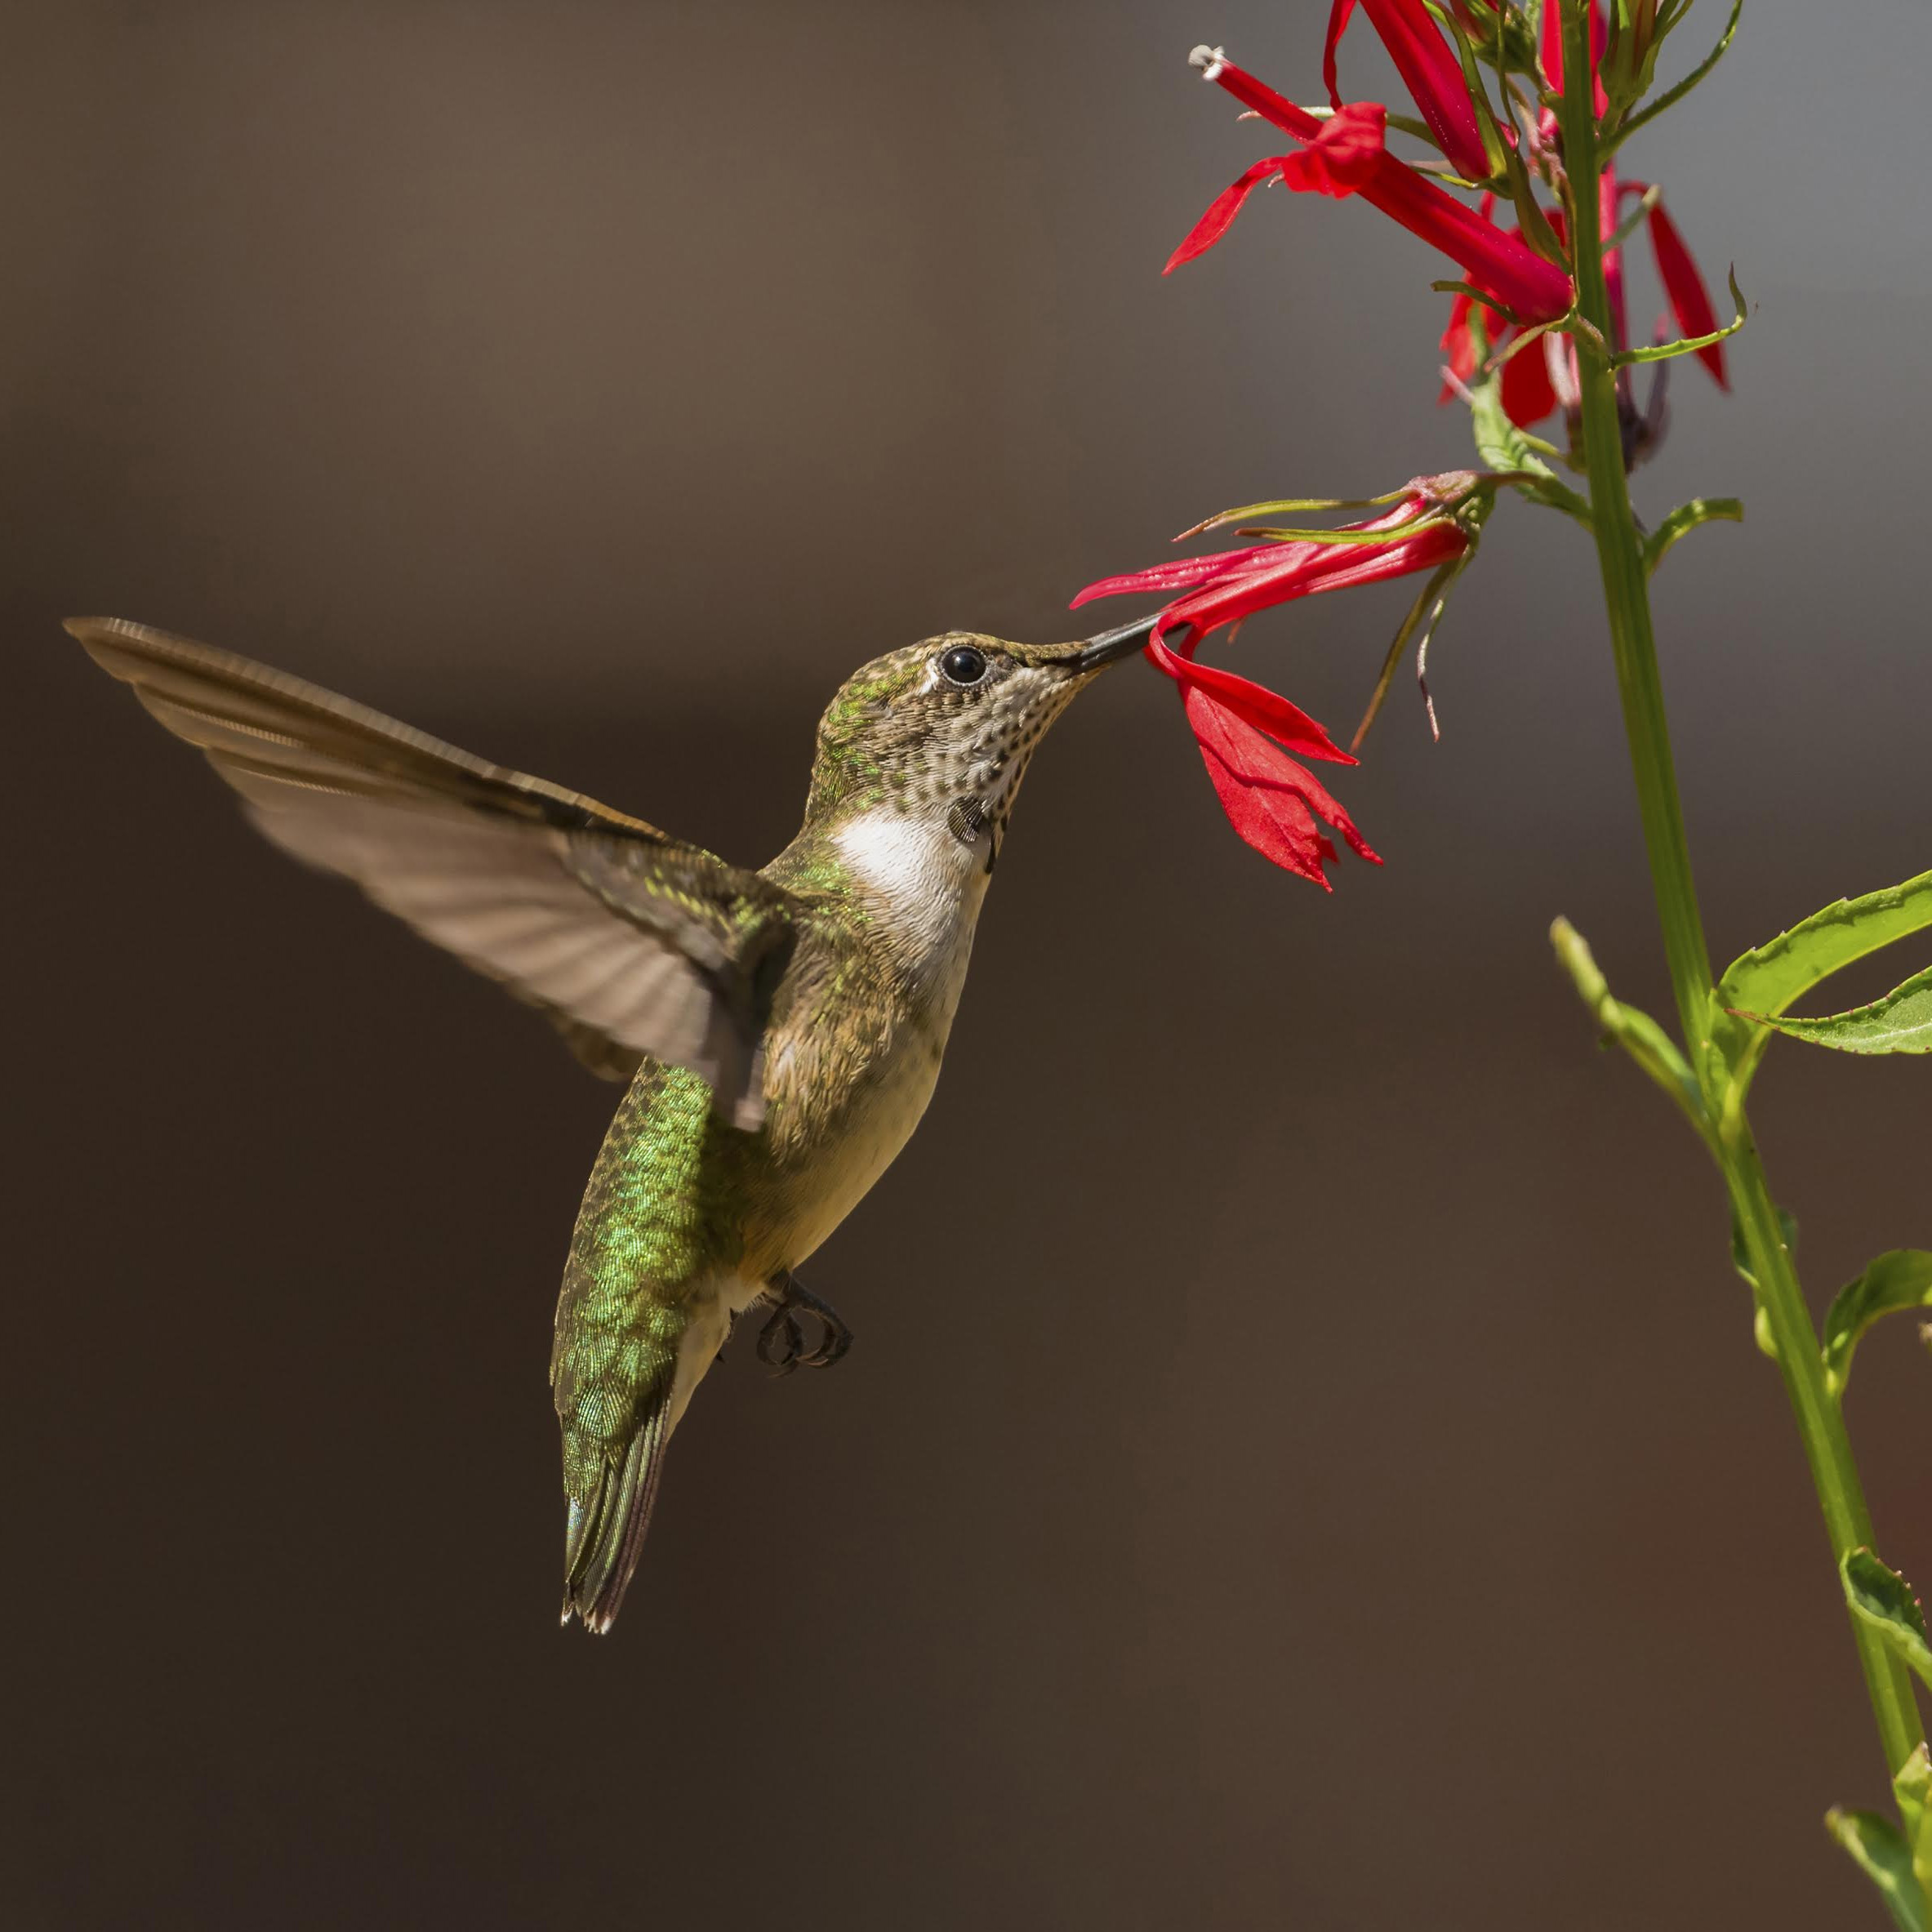 Hummingbird in flight sips from a cardinal flower.